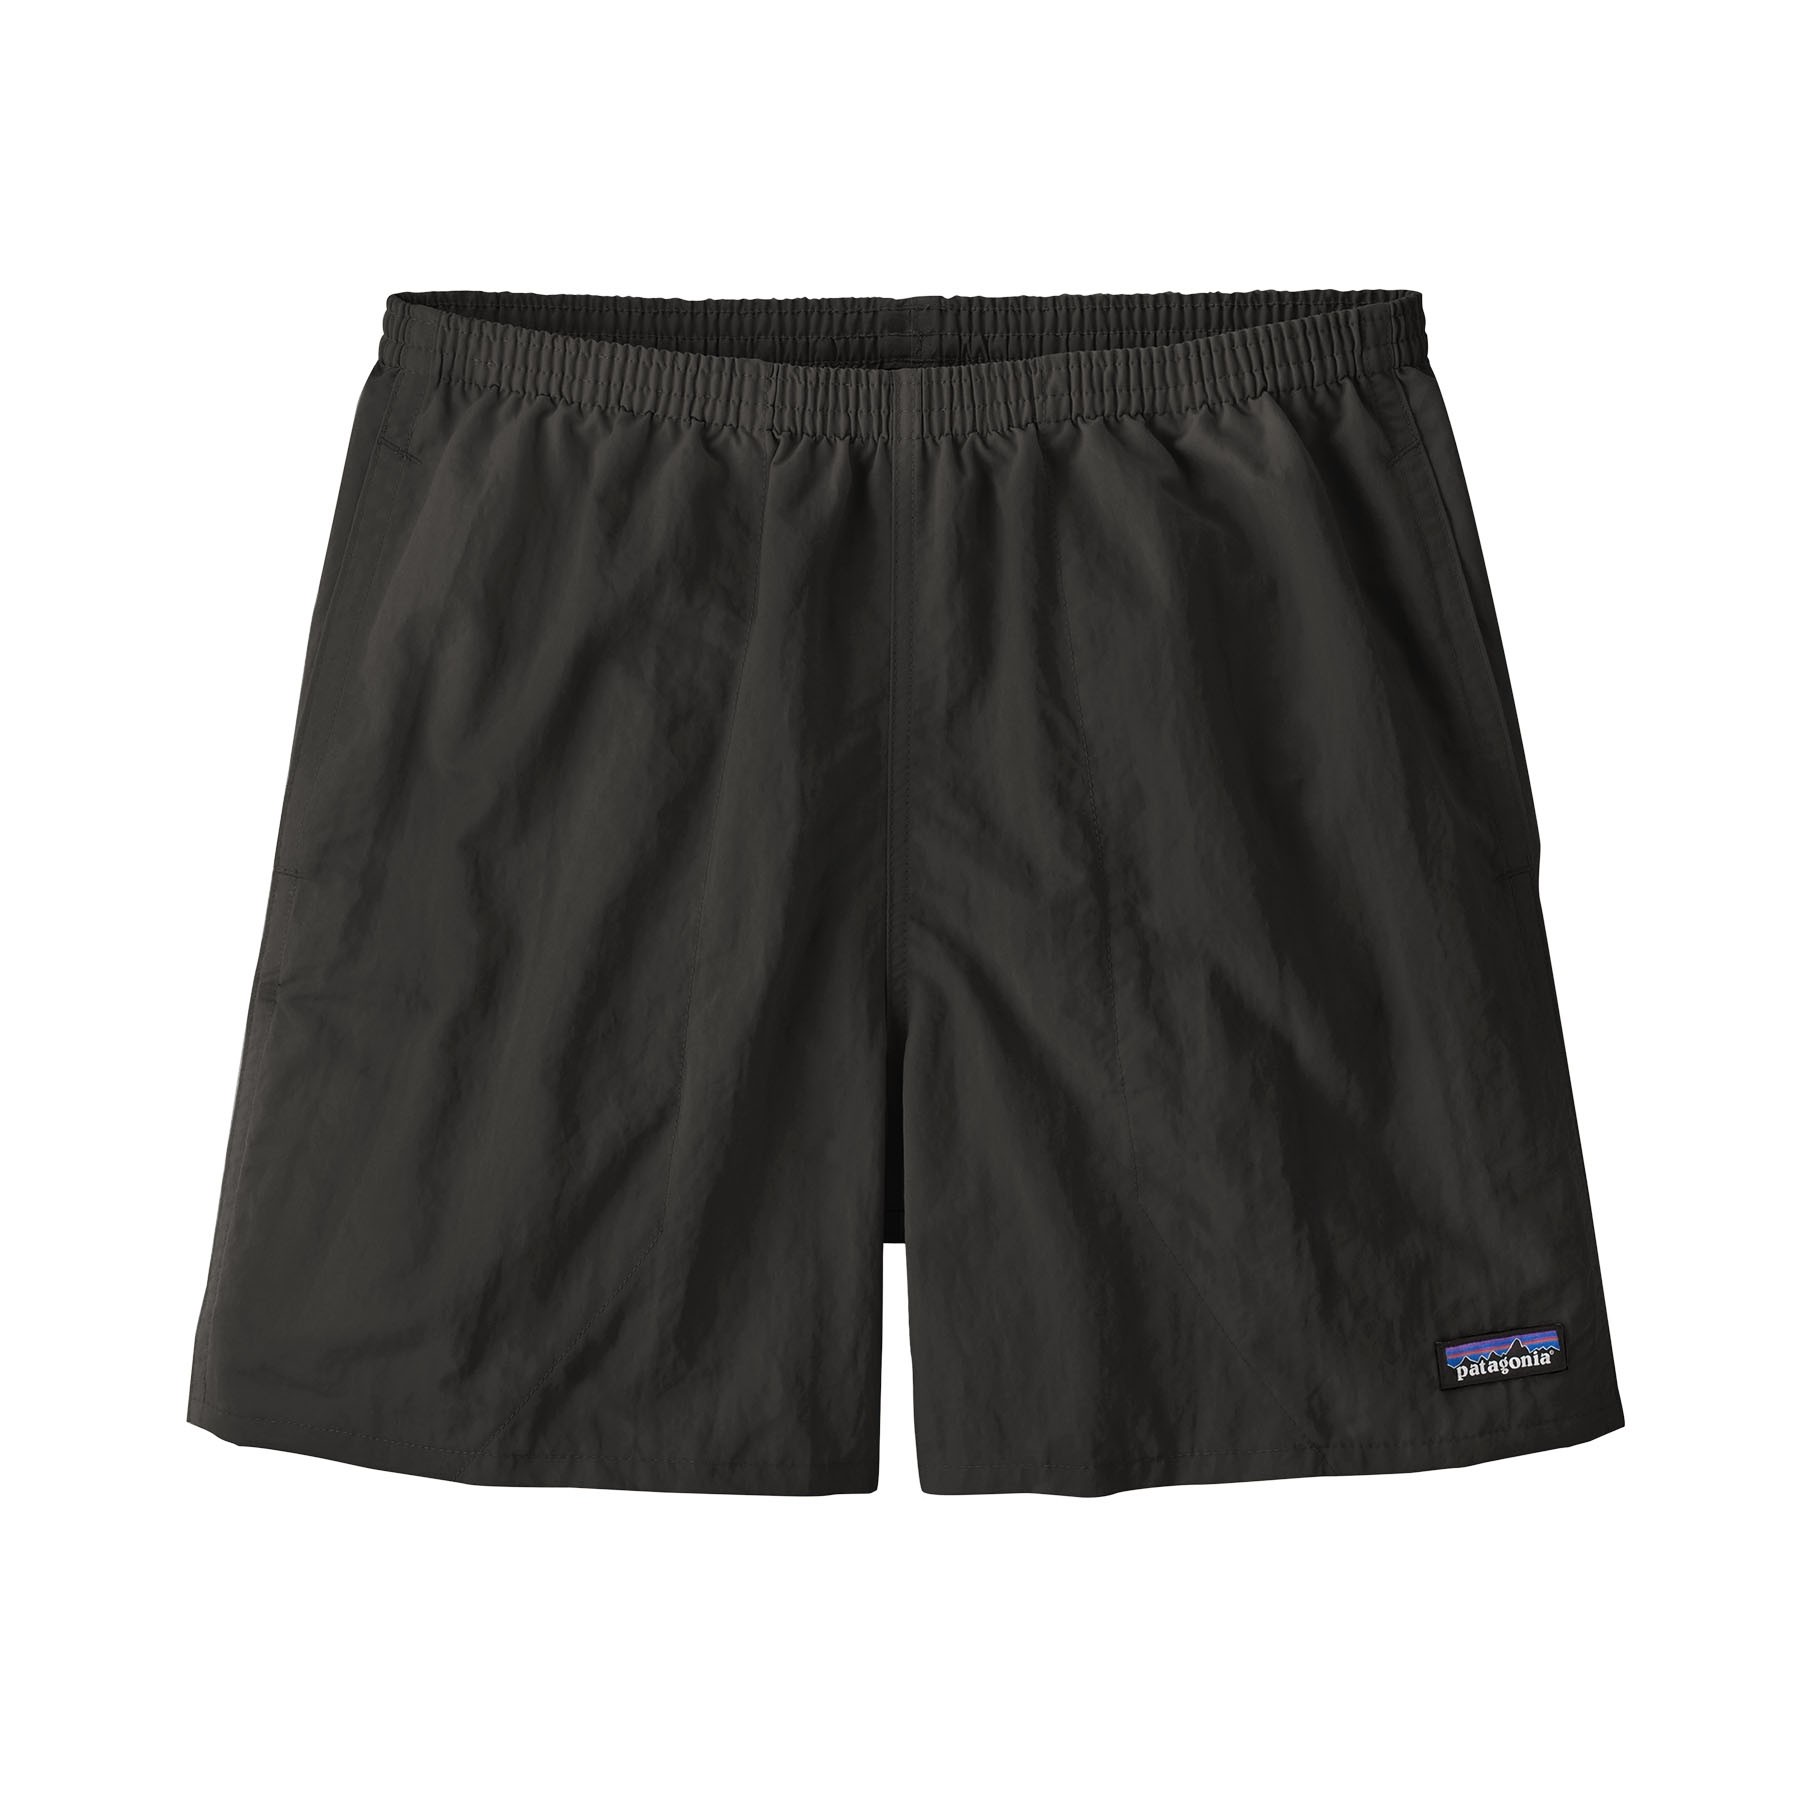 Patagonia Men's Baggies Shorts - 5" Inseam : Black